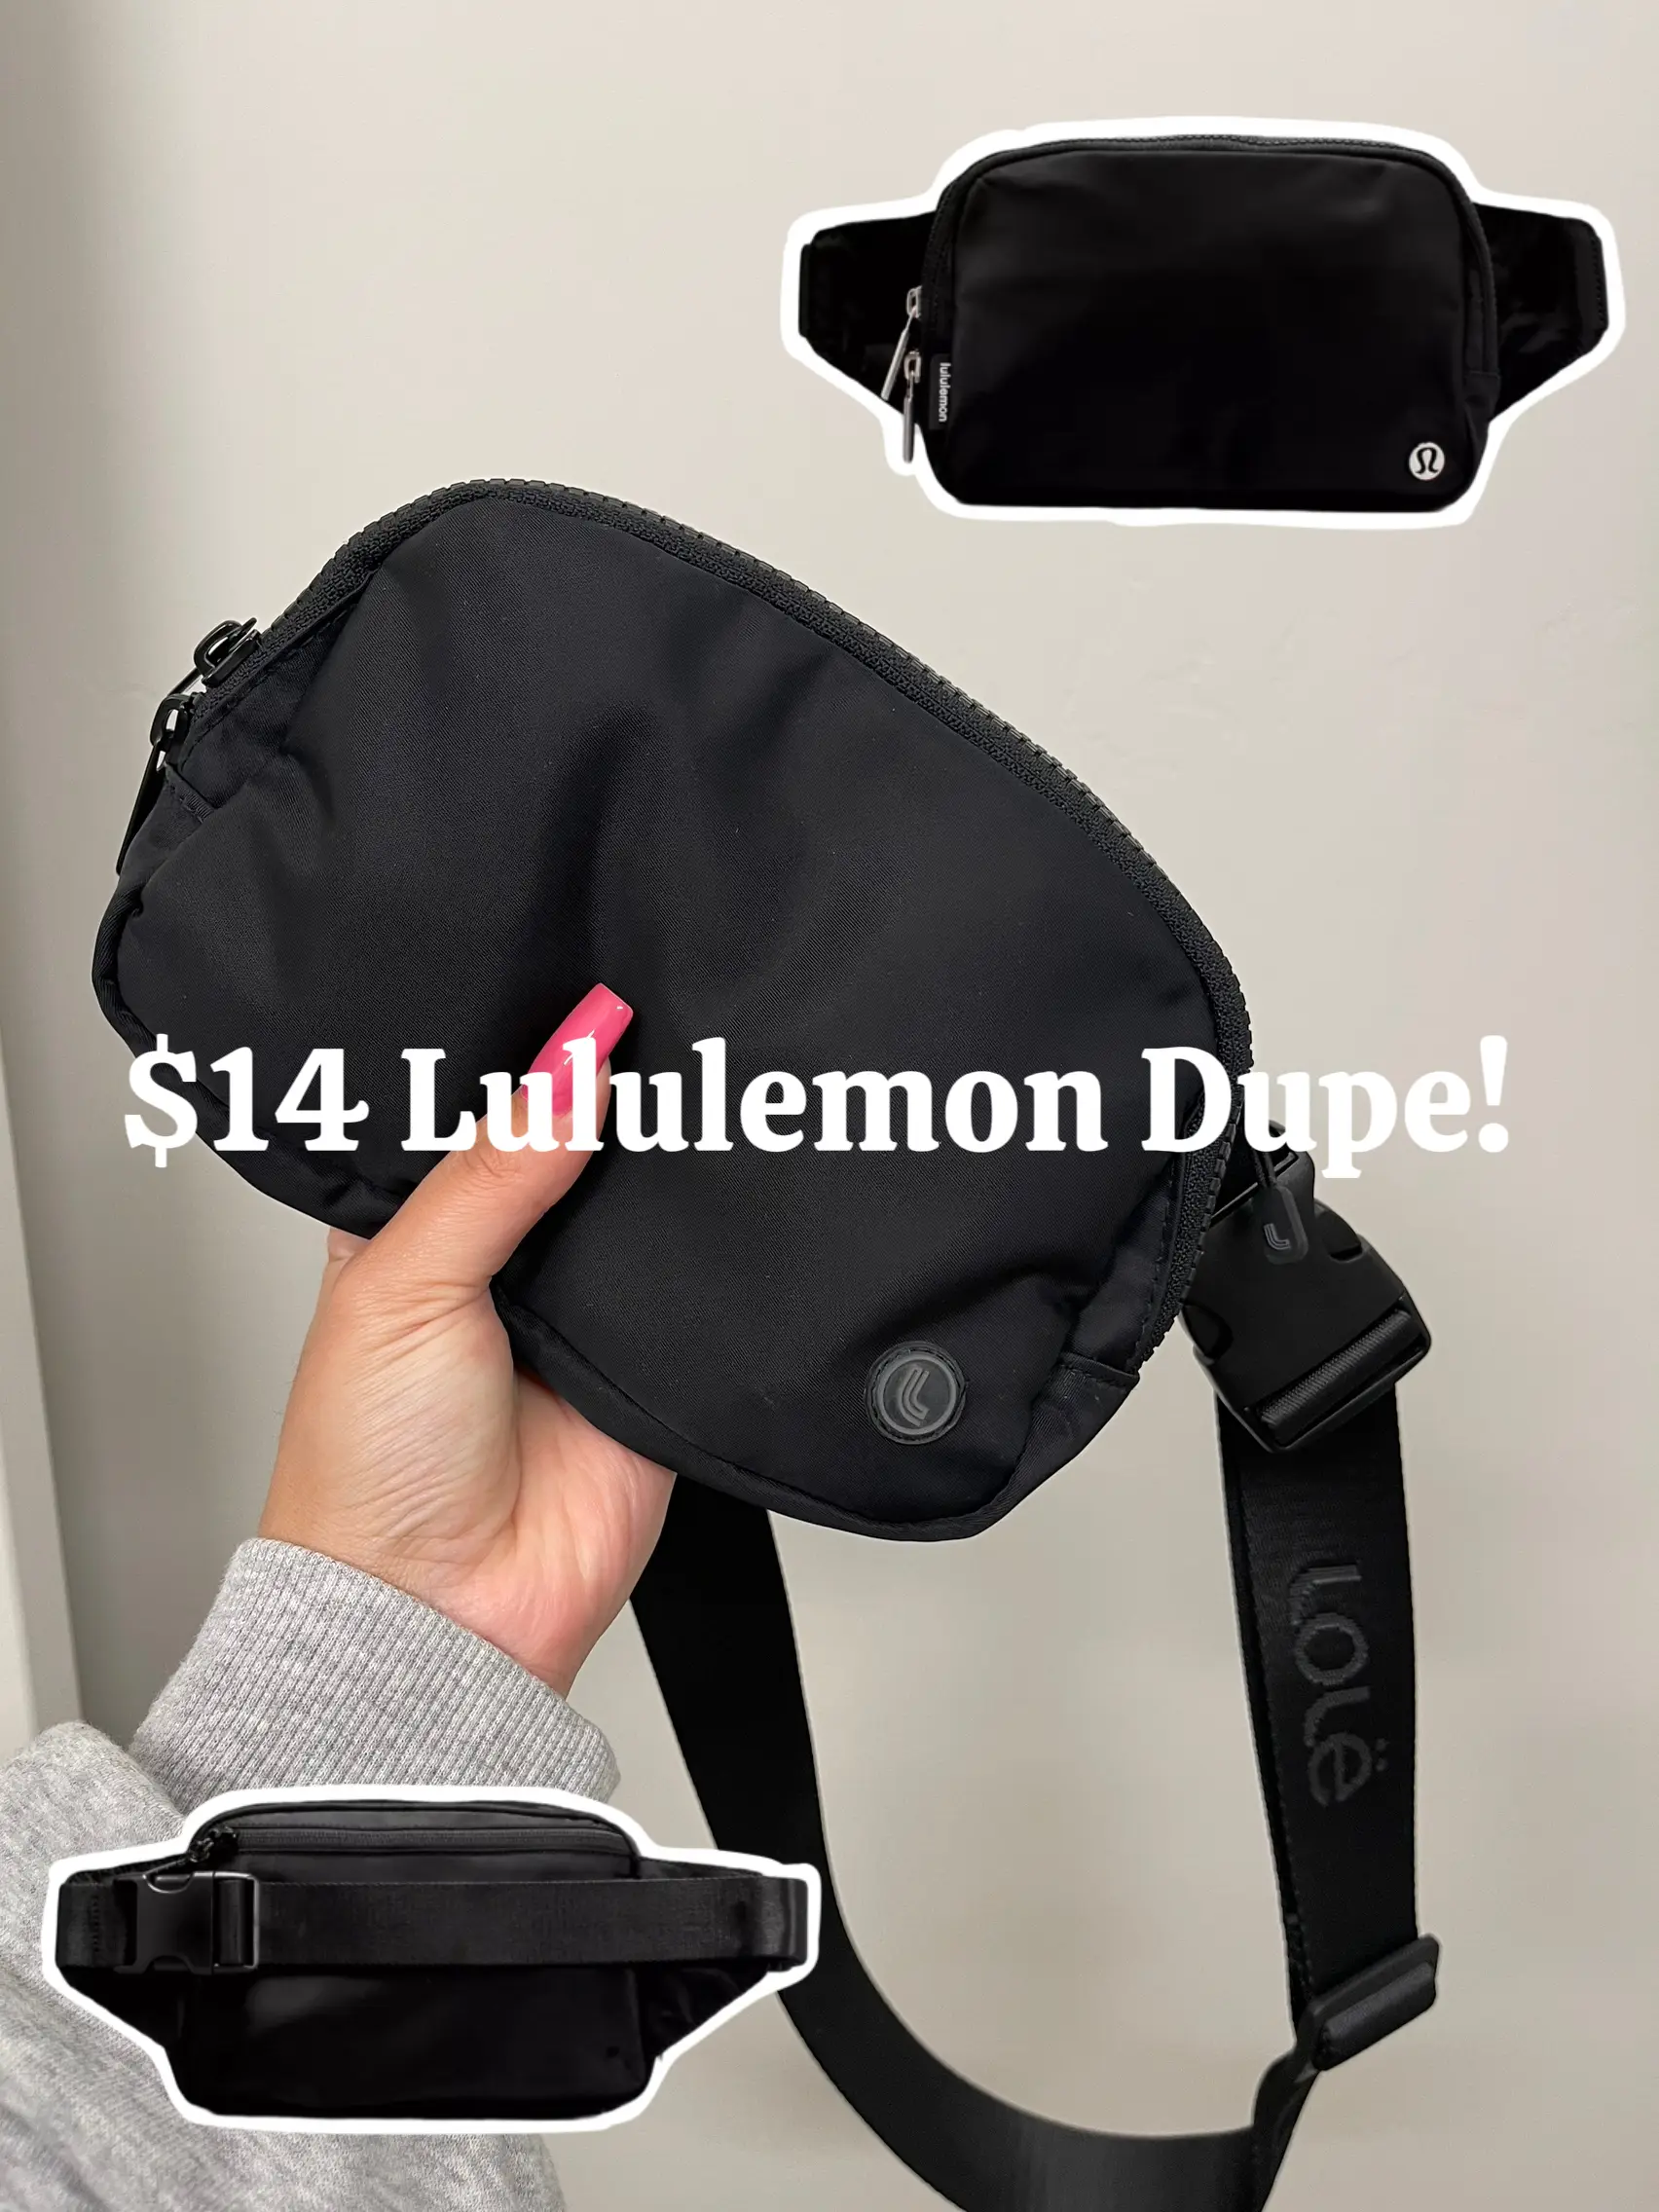 my first gold hardware lulu bag! the 1L everywhere belt bag in black 😍😍 :  r/lululemon